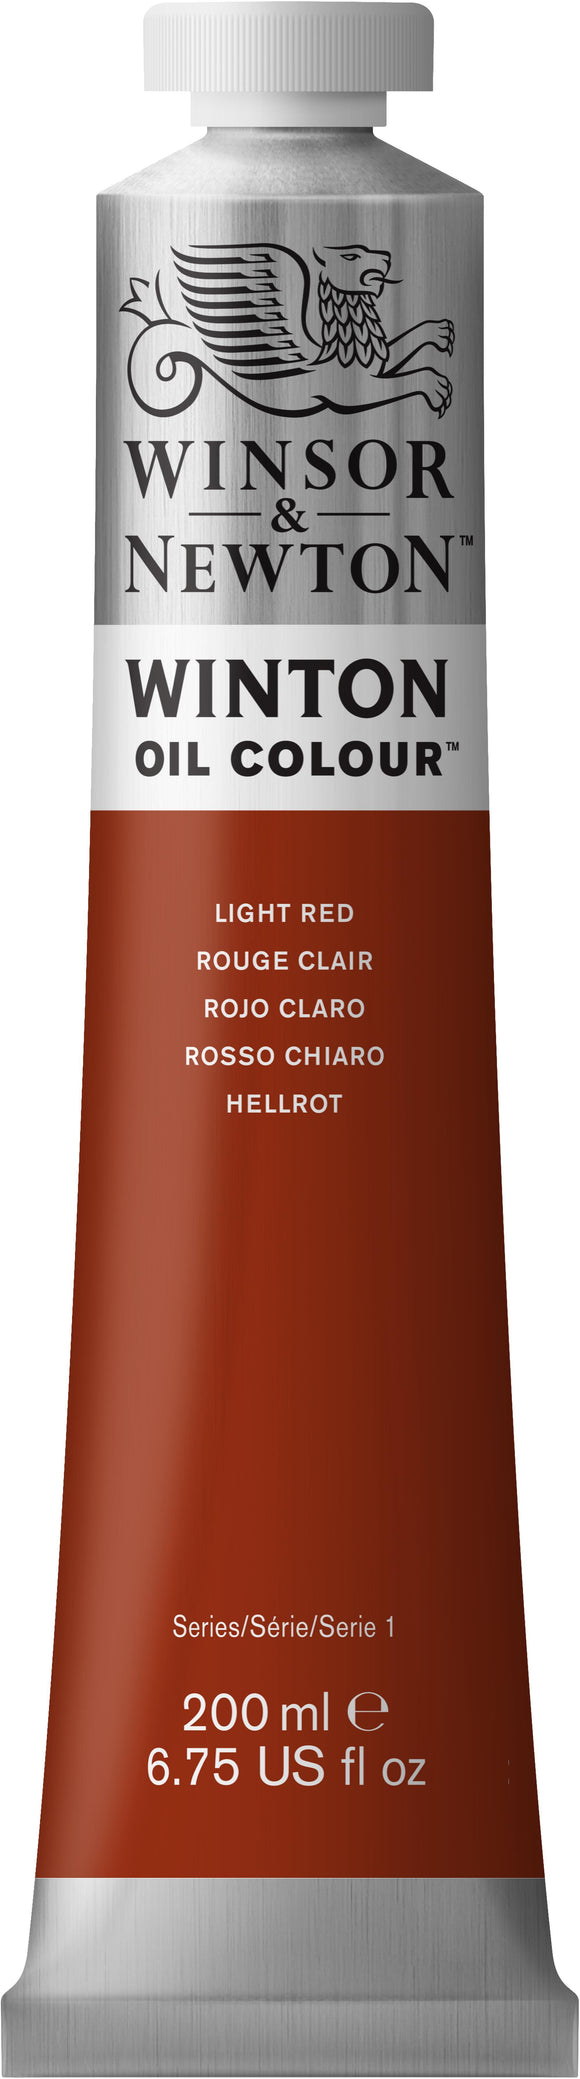 Winsor & Newton Winton Oil Colour  Light Red 200Ml